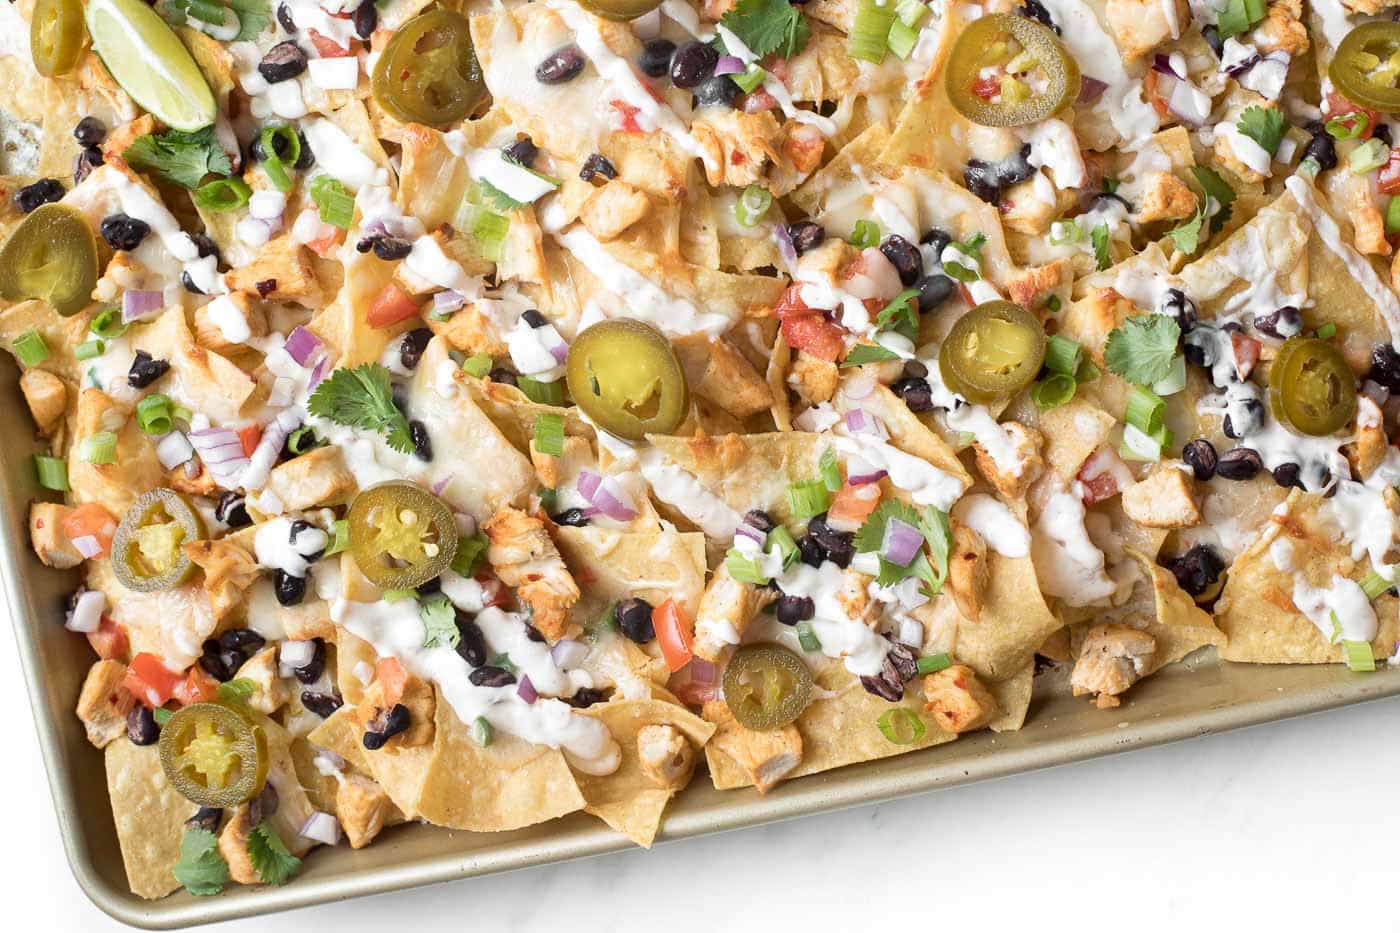 Sheet pan nachos with toppings